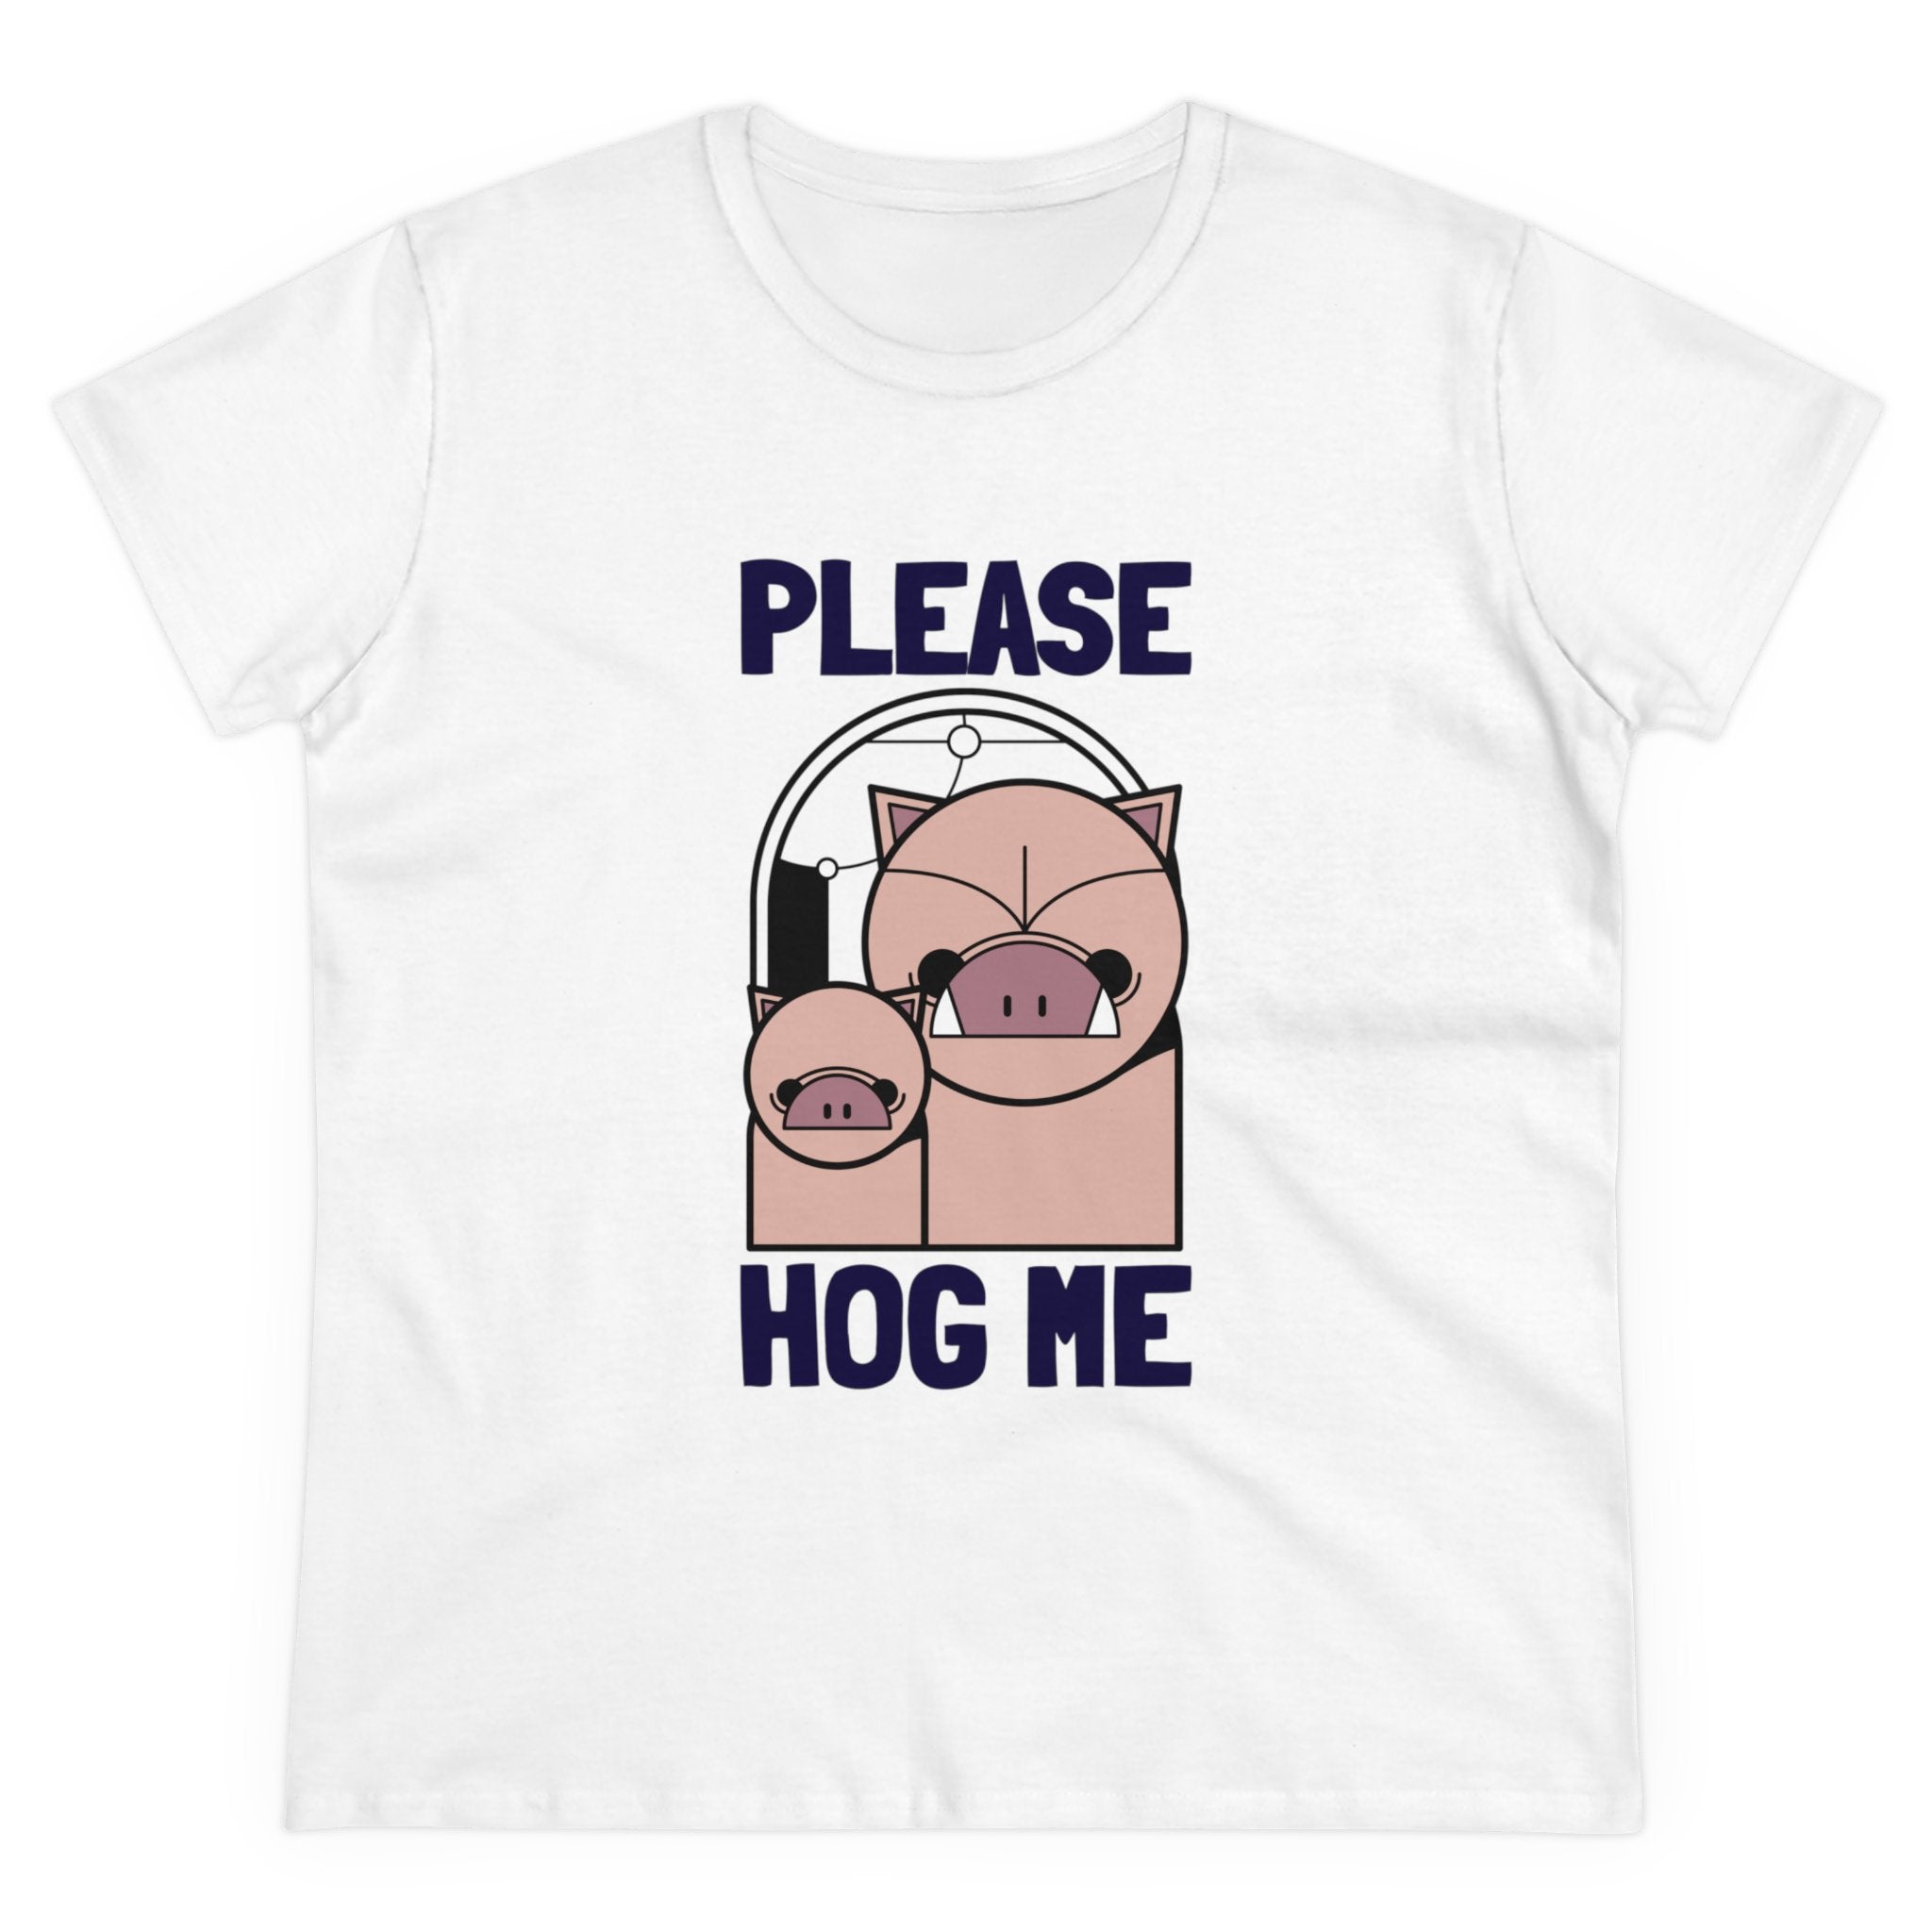 Please Hog Me - Women's Tee